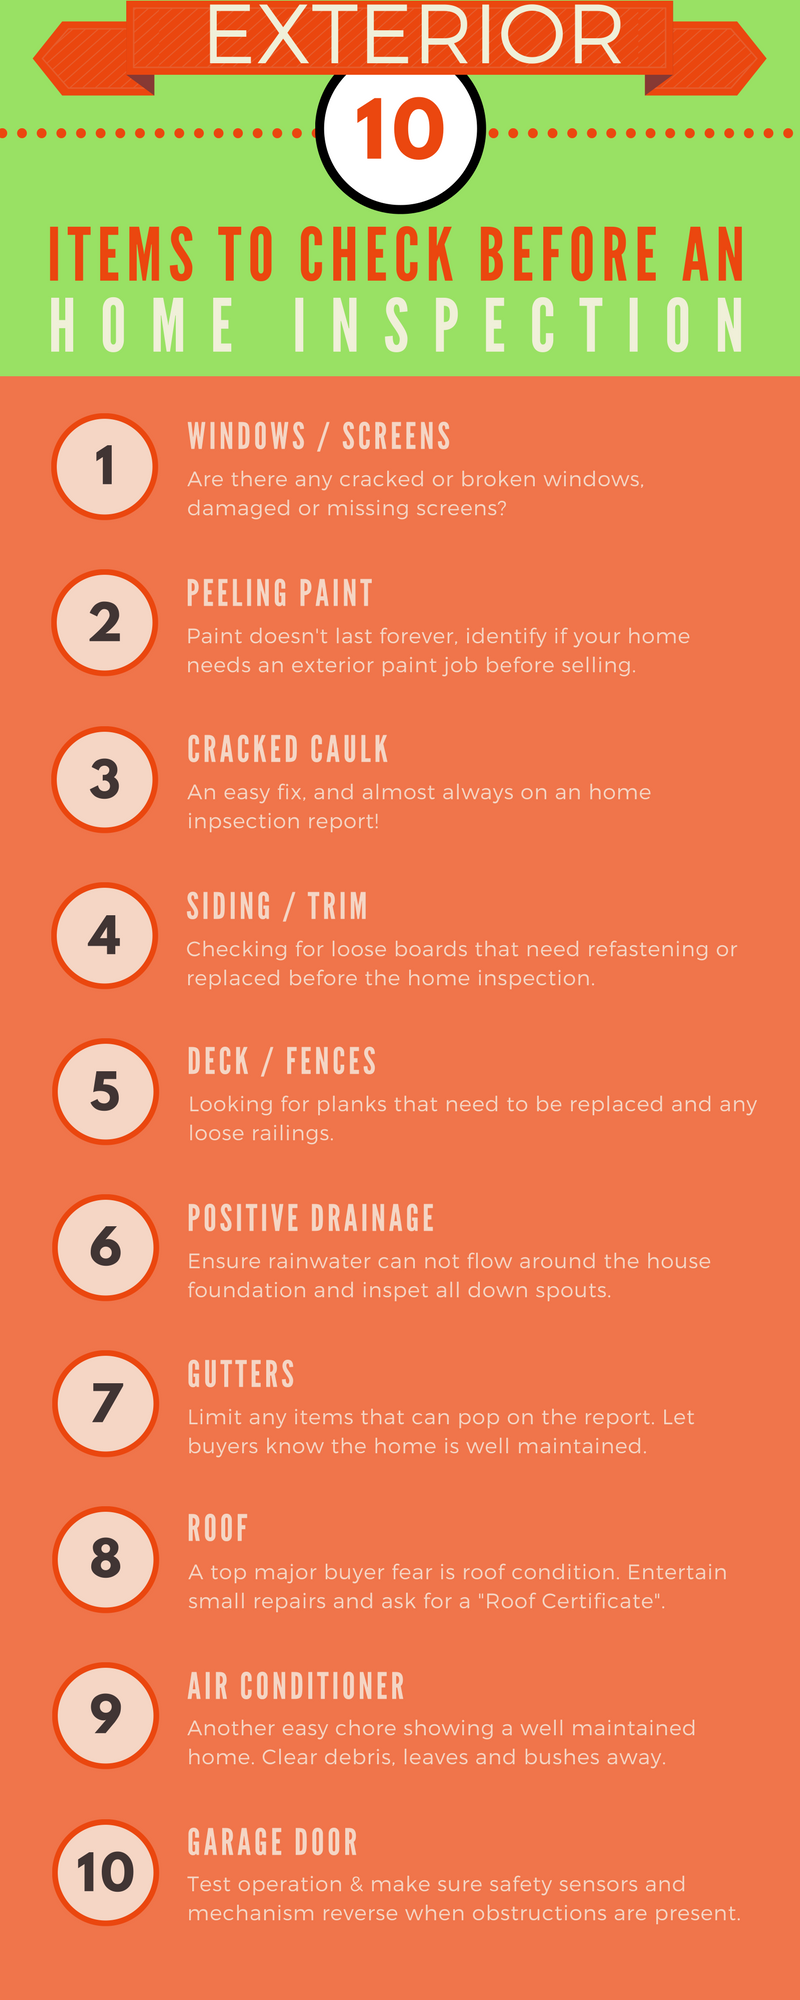 Preparing For A Home Inspection - Exterior Checklist